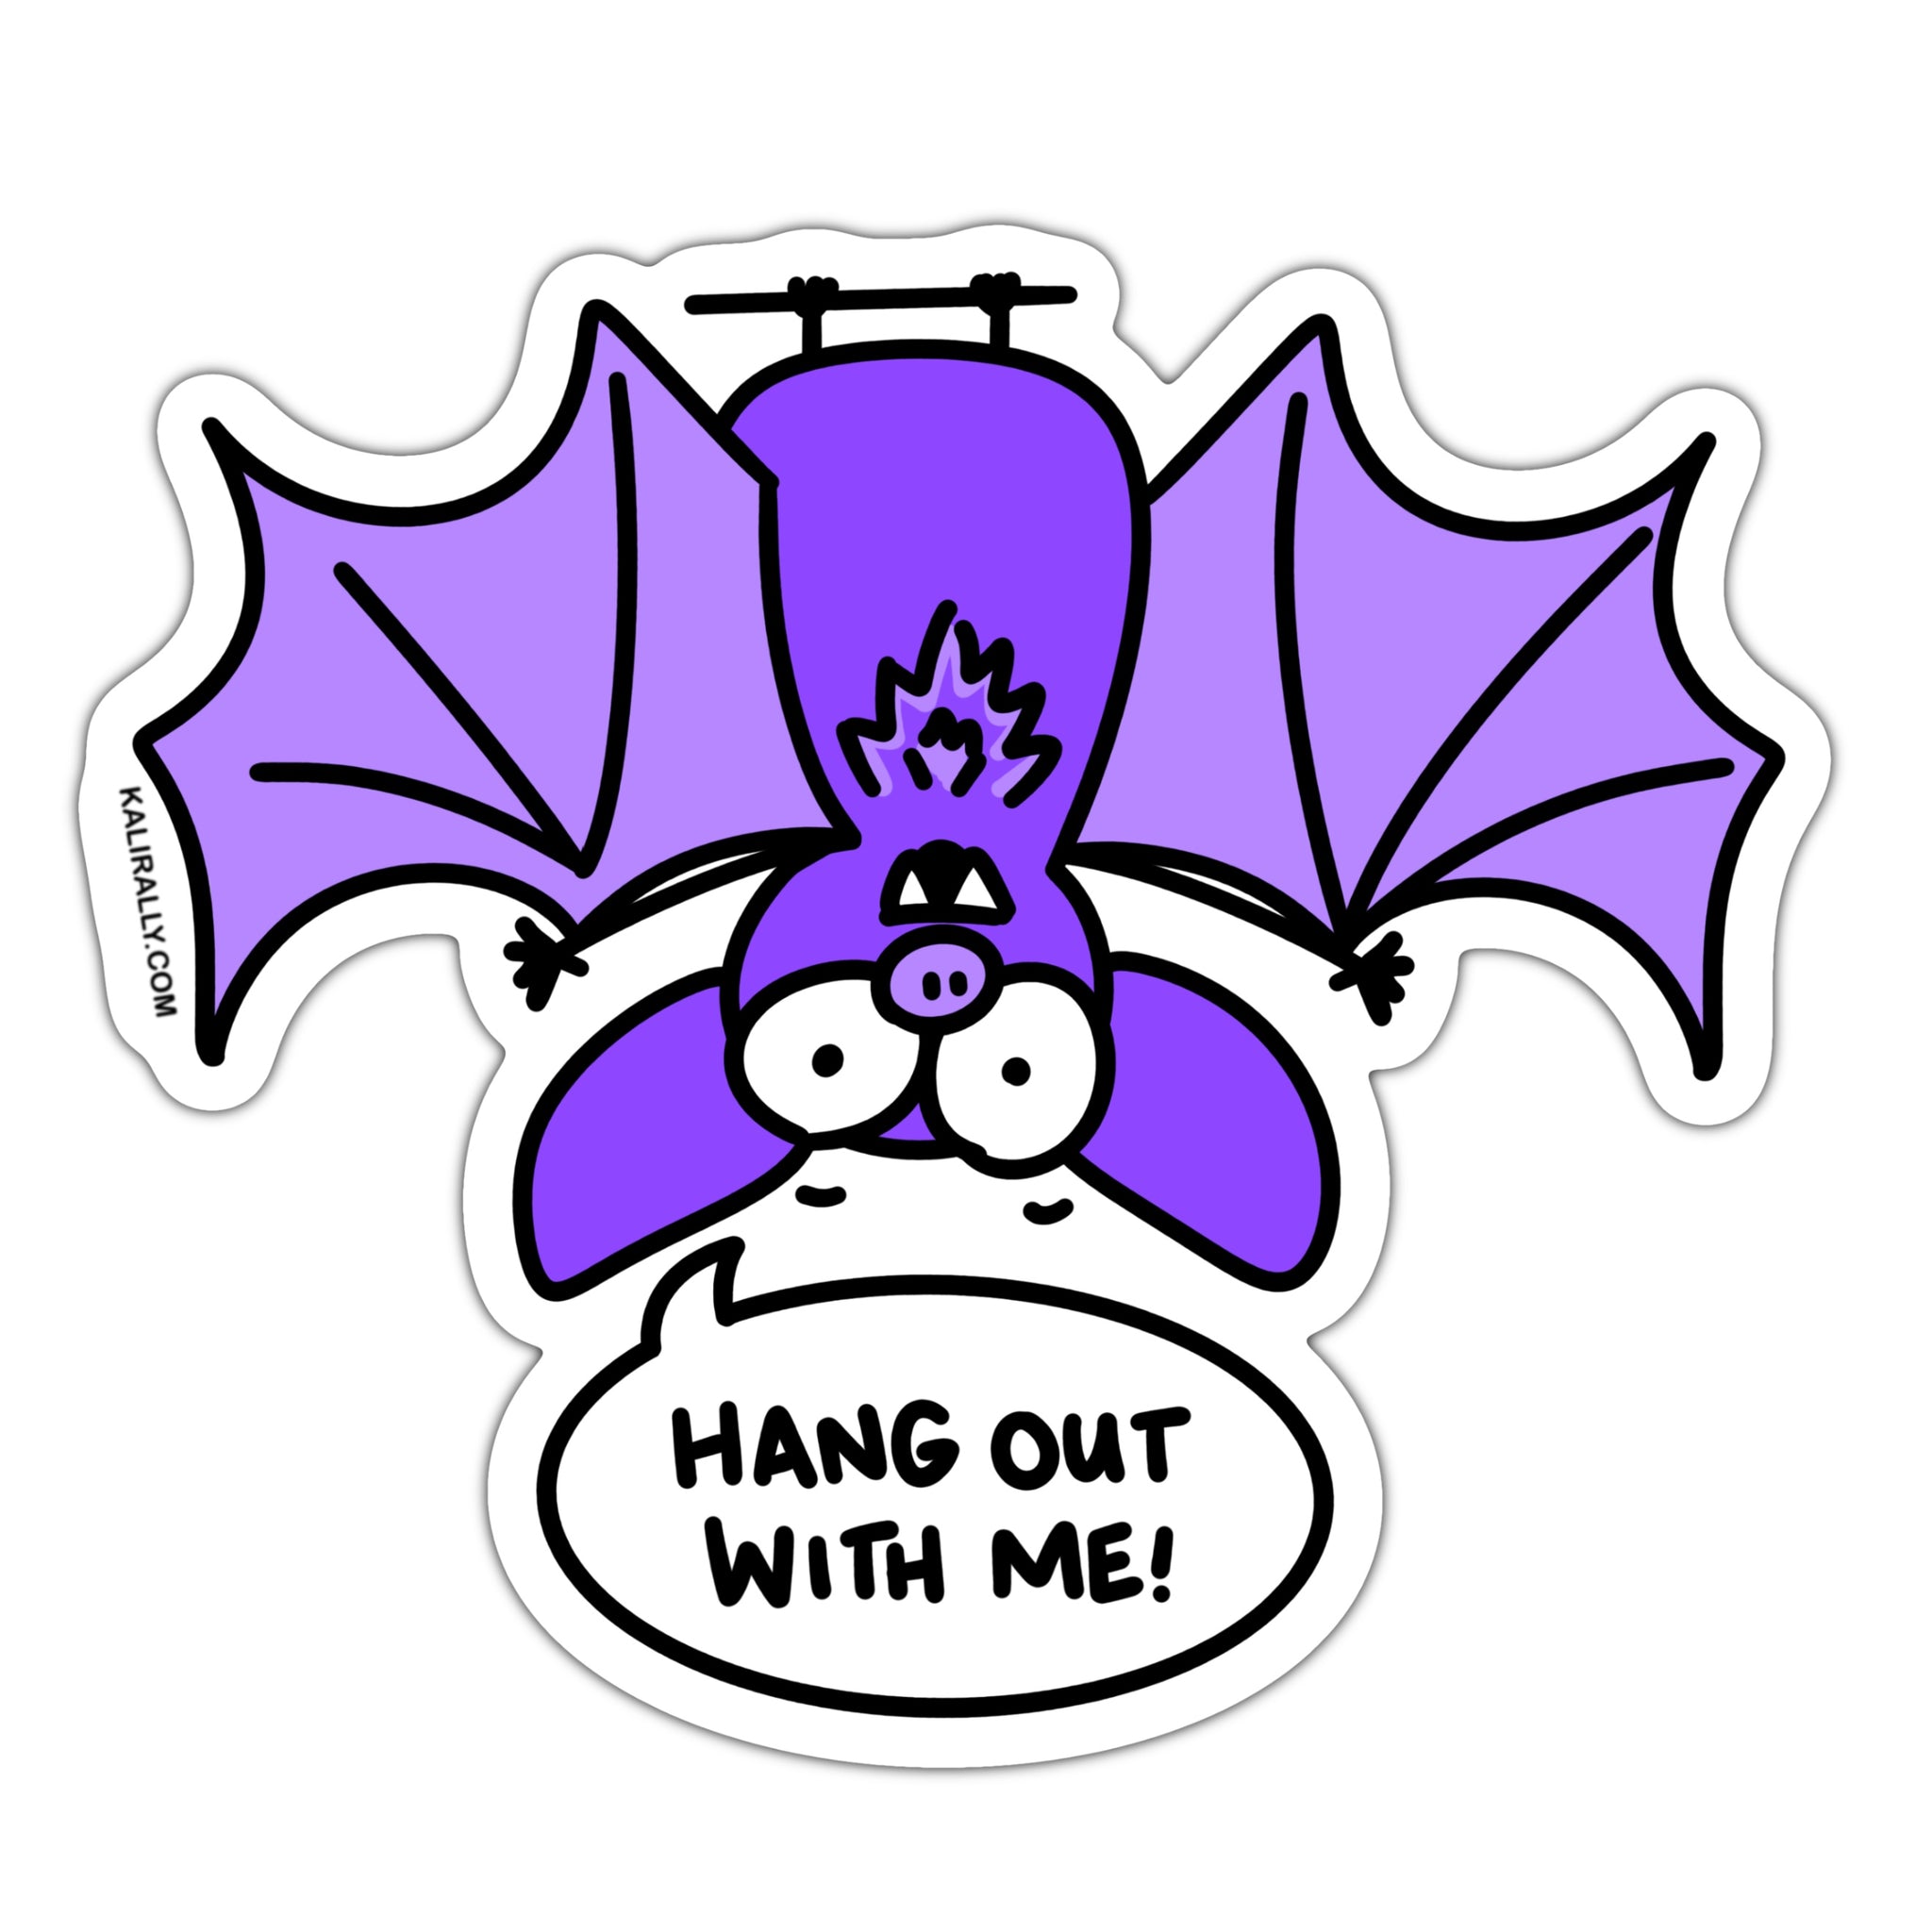 Cute bat sticker, Hang out with me, Halloween sticker, waterproof vinyl sticker